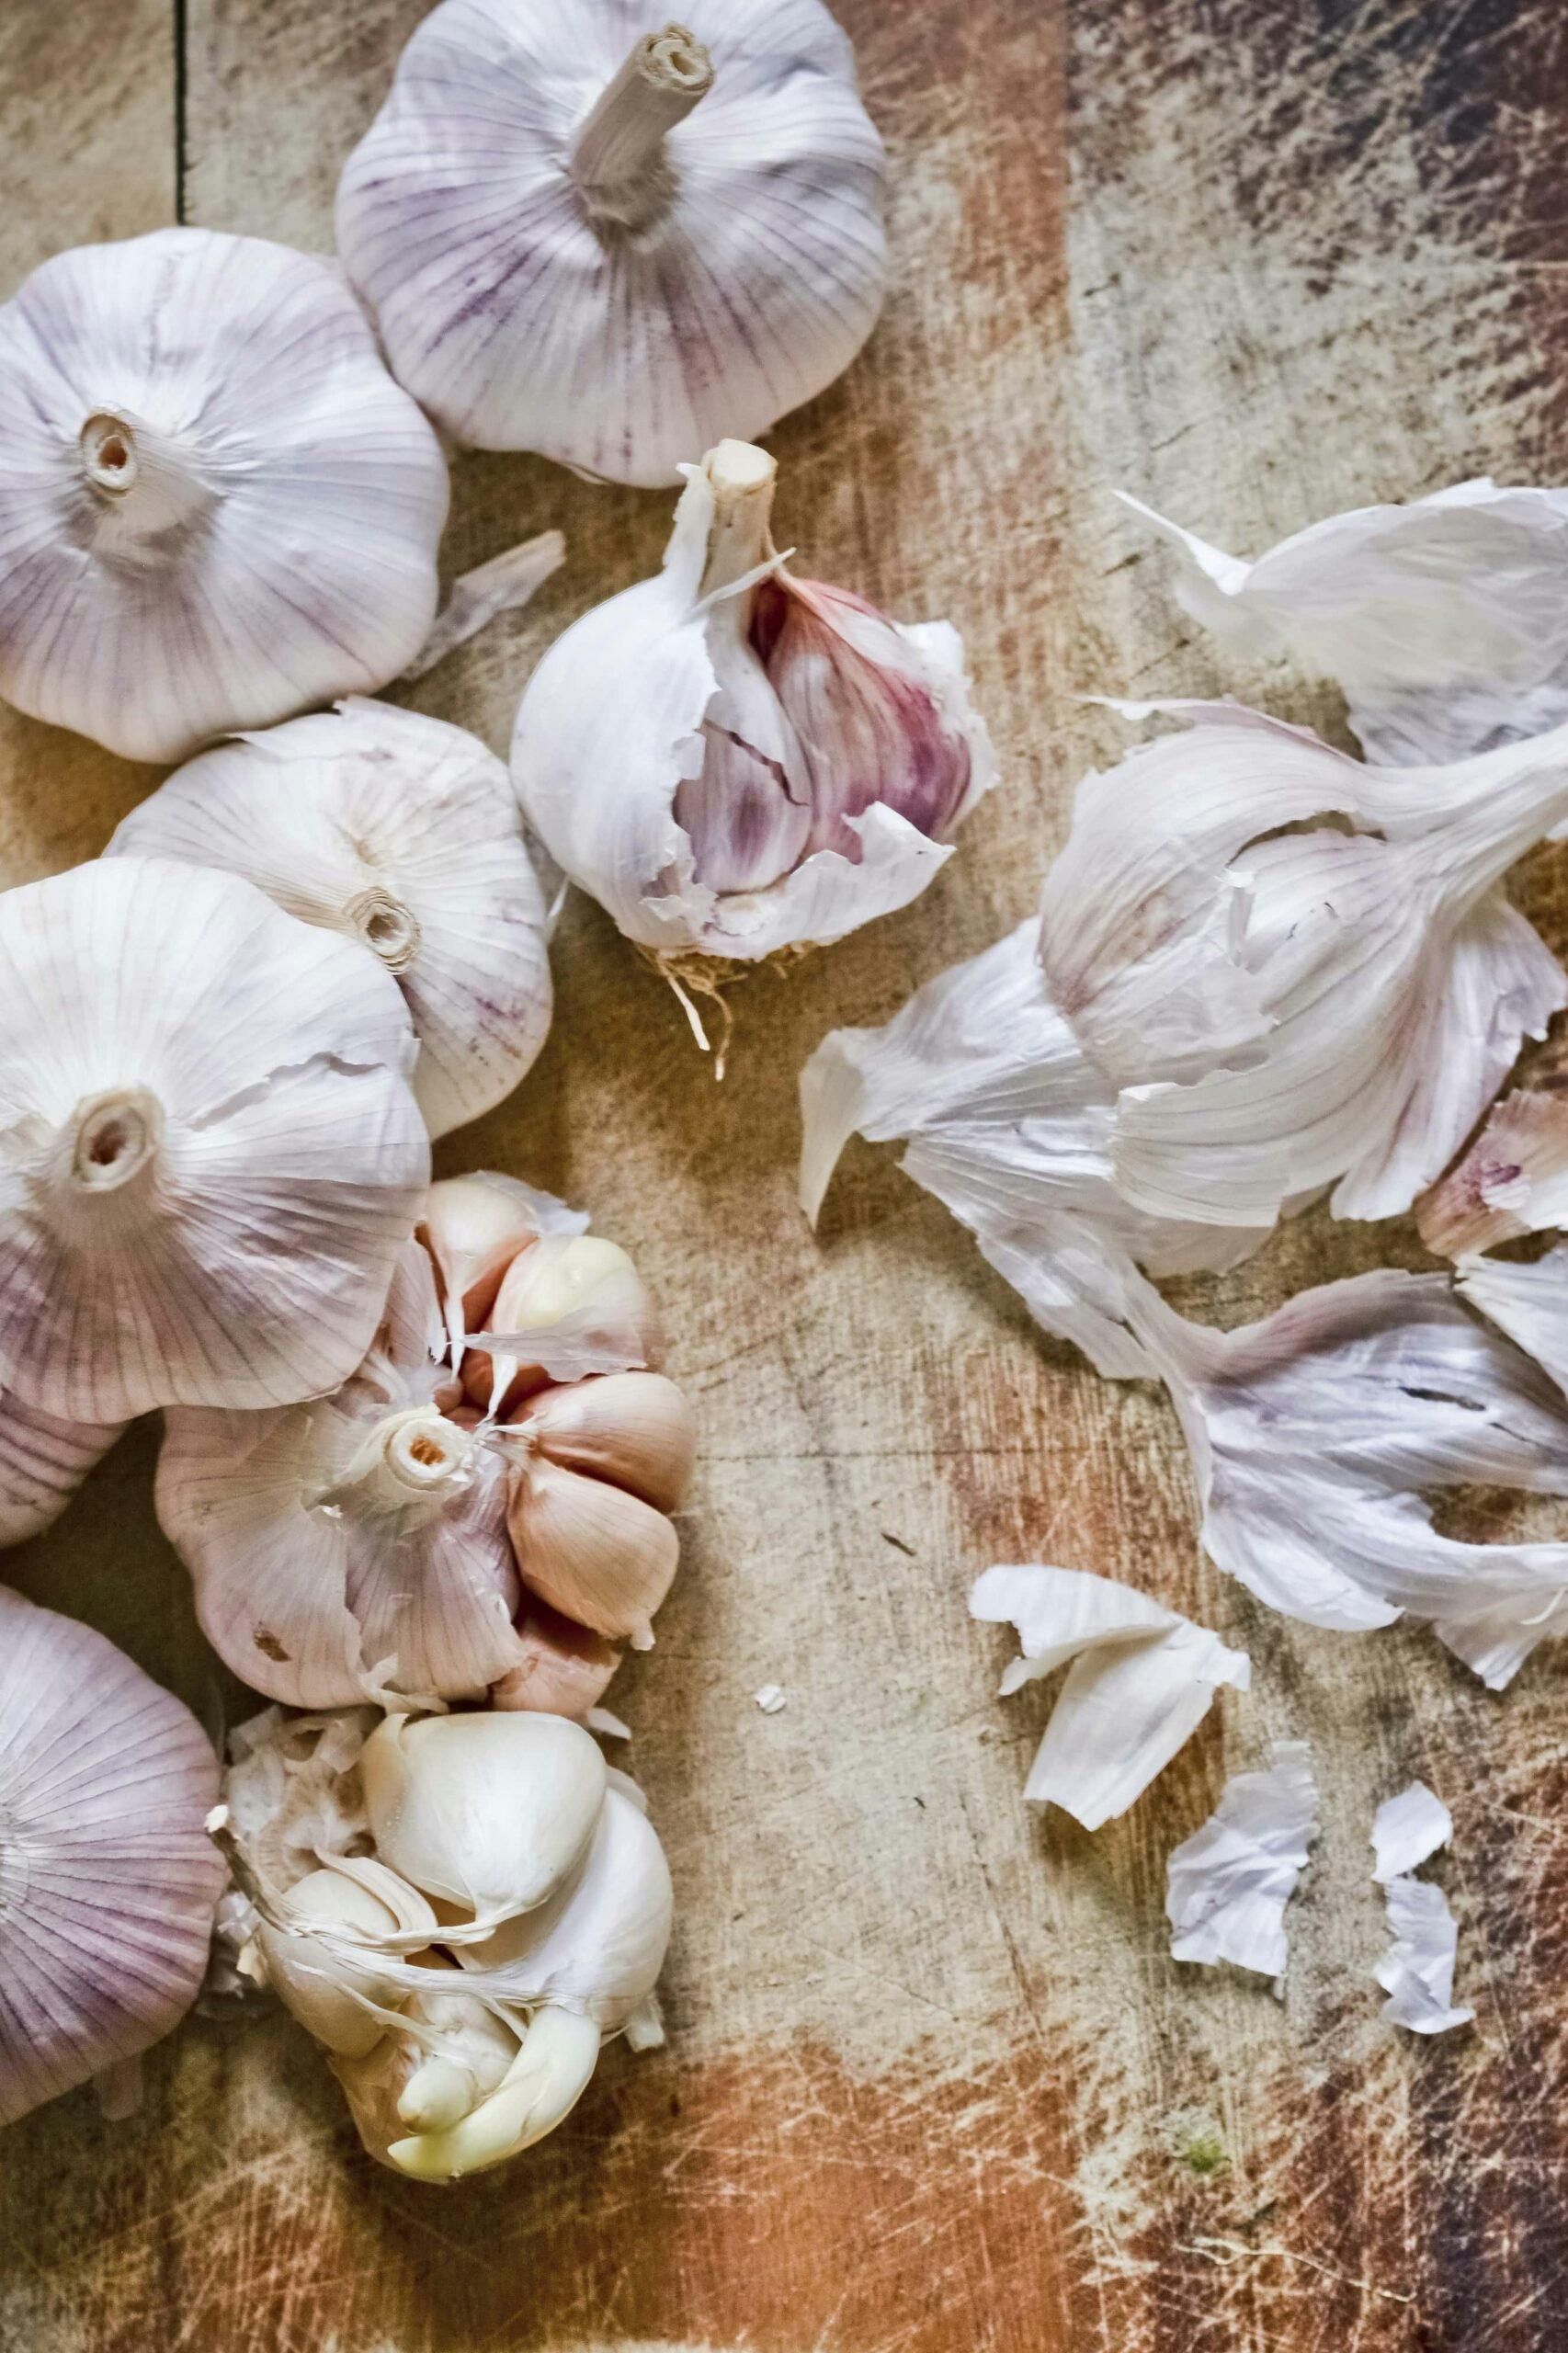 The benefits of Garlic